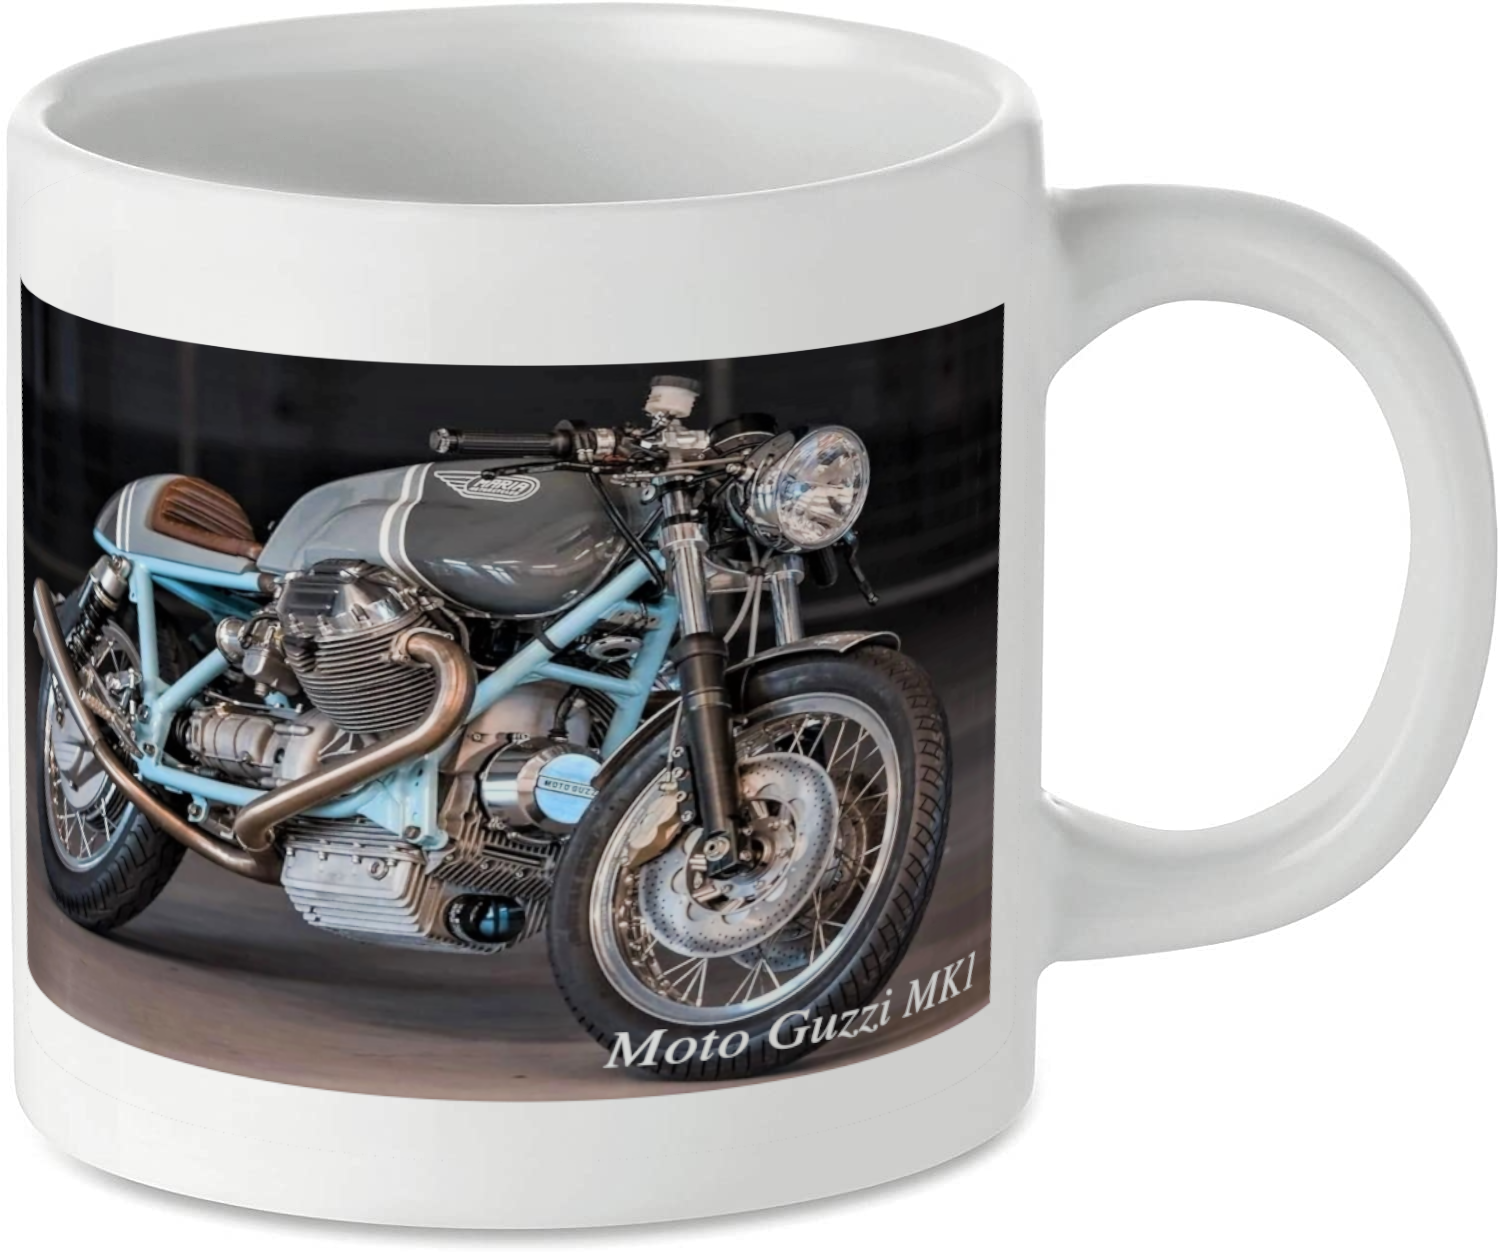 Moto Guzzi MK1 Motorcycle Motorbike Tea Coffee Mug Ideal Biker Gift Printed UK